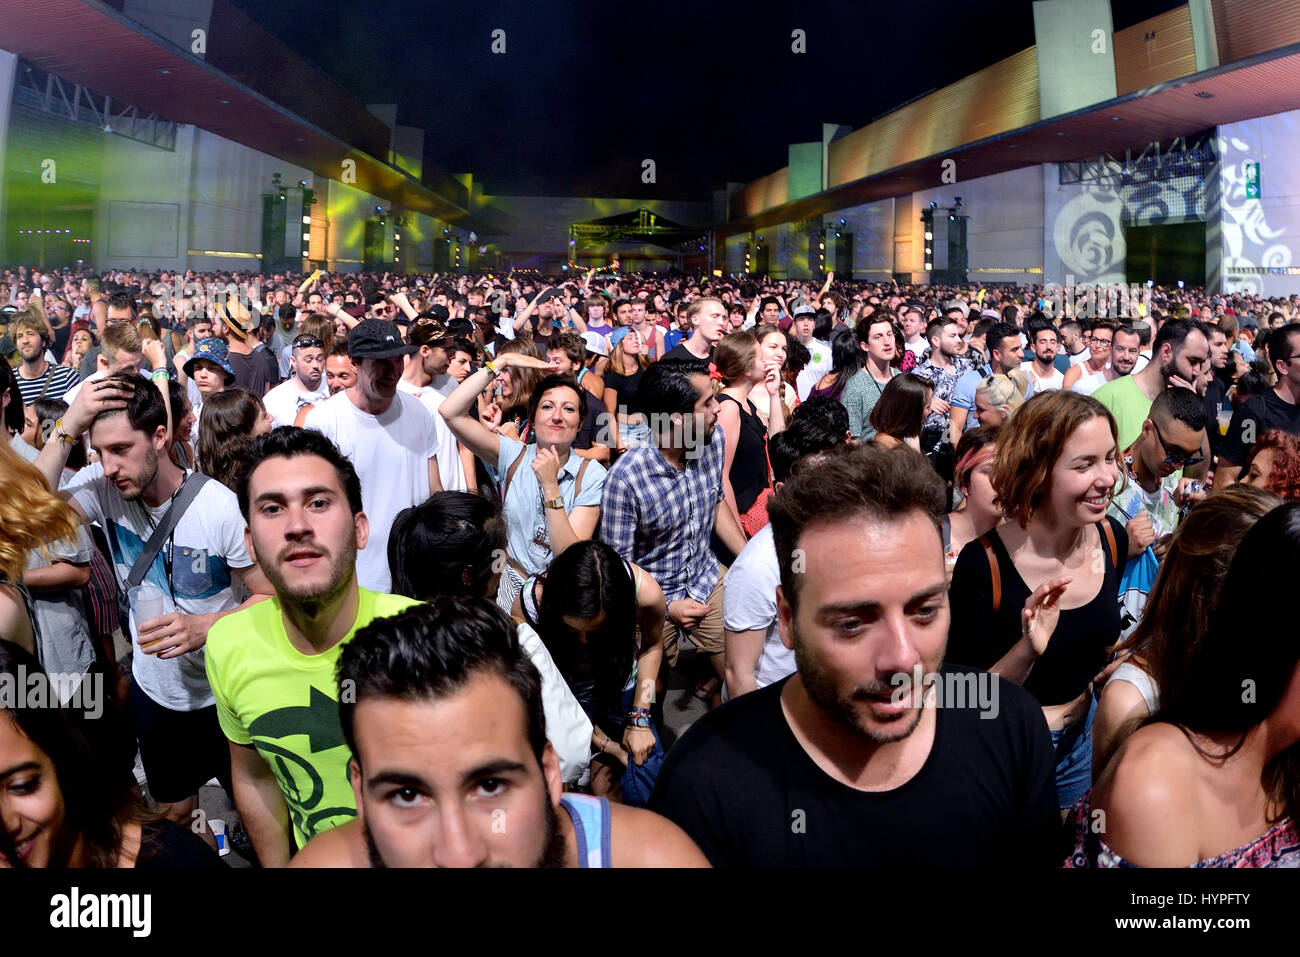 BARCELONA - JUN 19: Crowd dance in a concert at Sonar Festival on June 19, 2015 in Barcelona, Spain. Stock Photo